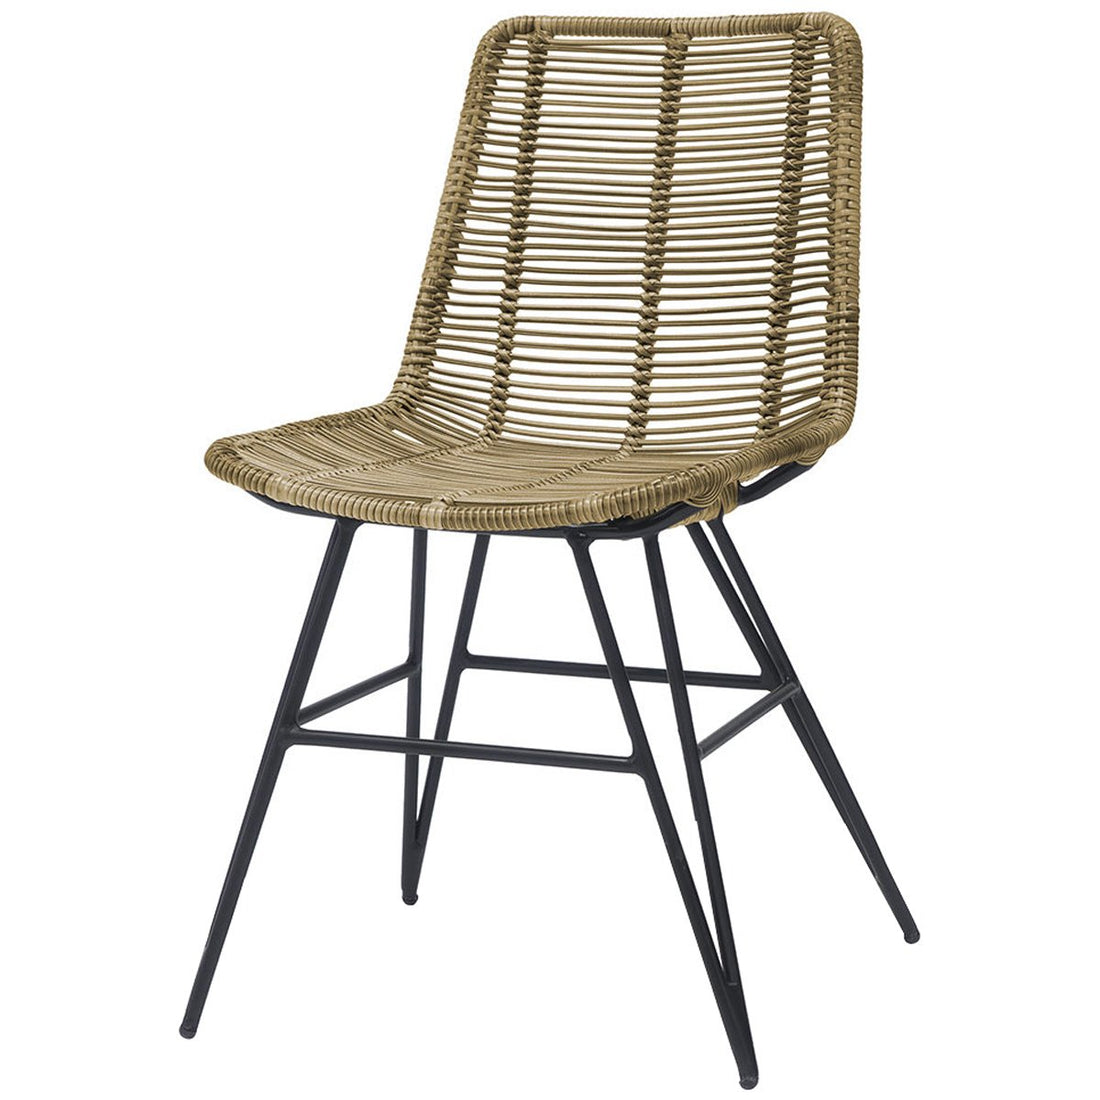 Palecek Hermosa Outdoor Side Chair